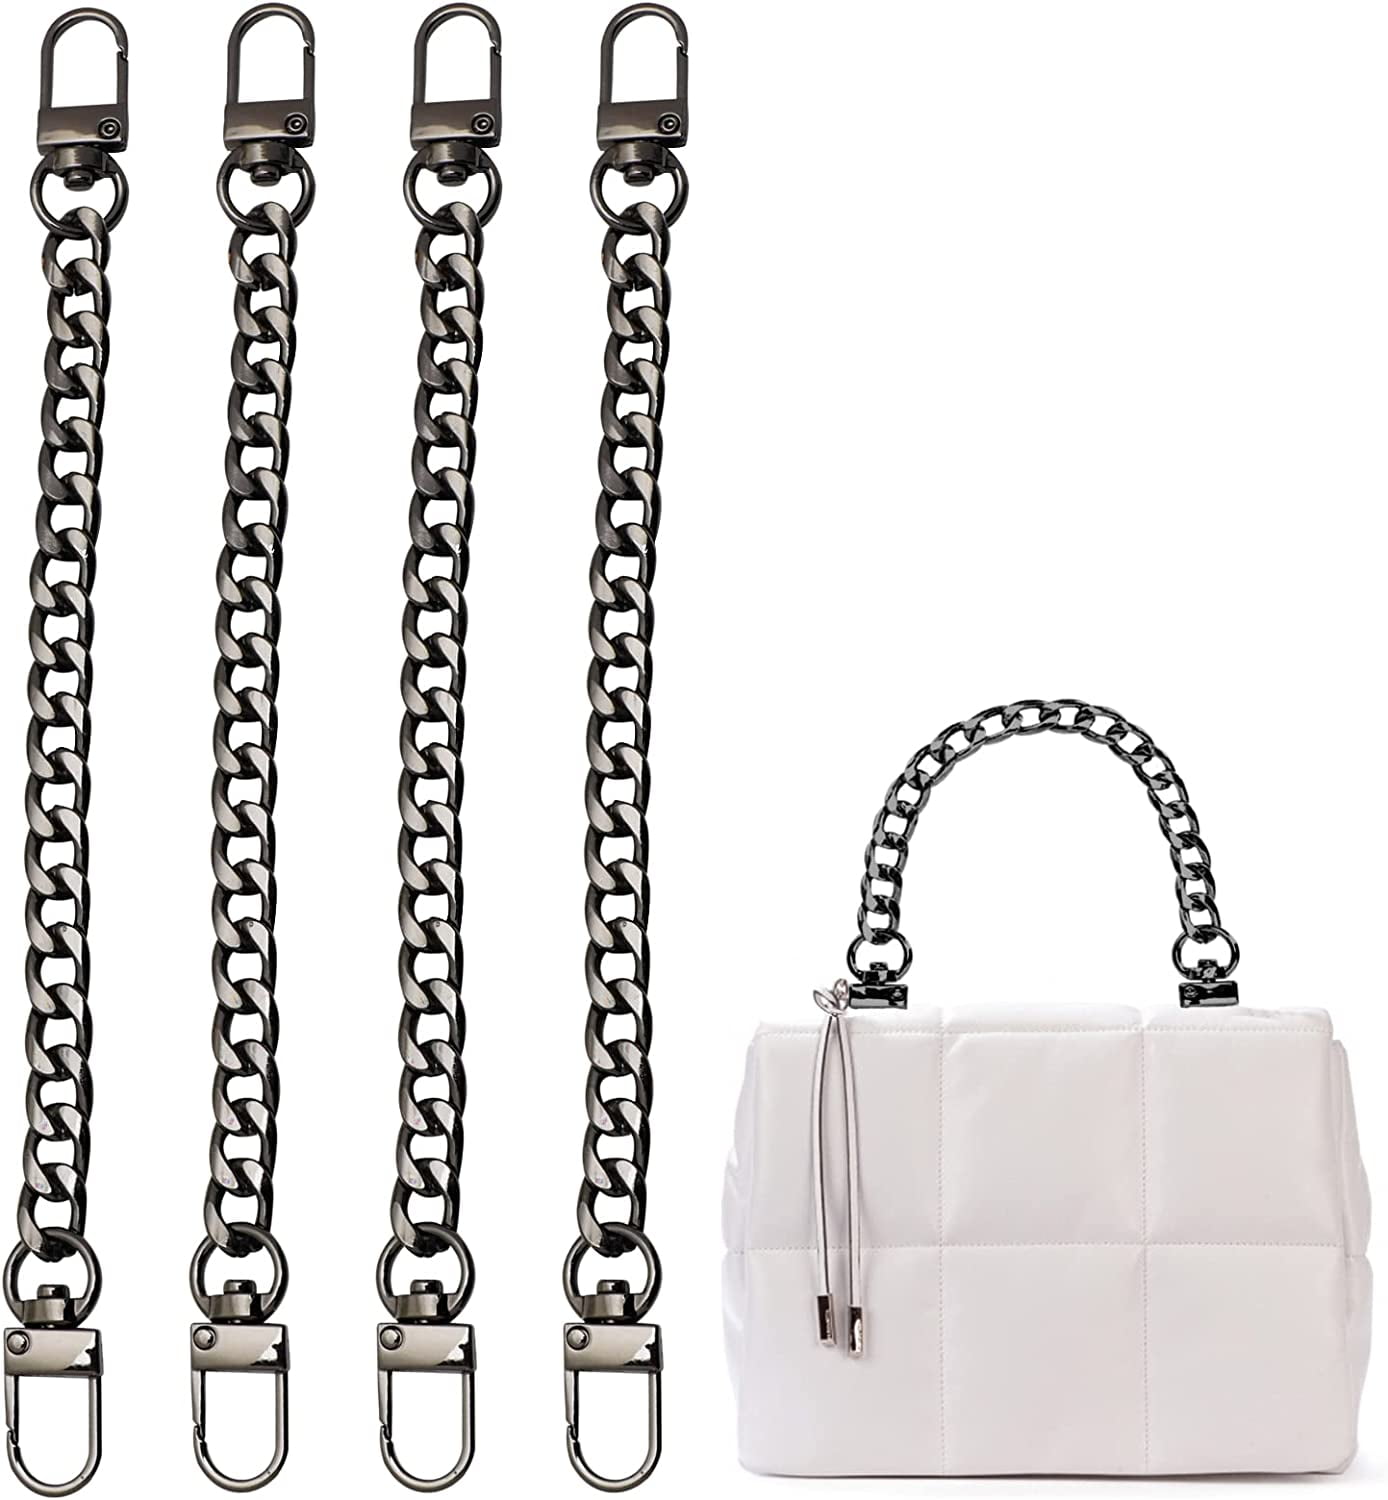 Mini Purse Chain, DIY Metal Flat Chain- for Messenger Bag Purse Strap  Extender Handbag Accessory Decoration, with Metal Buckle